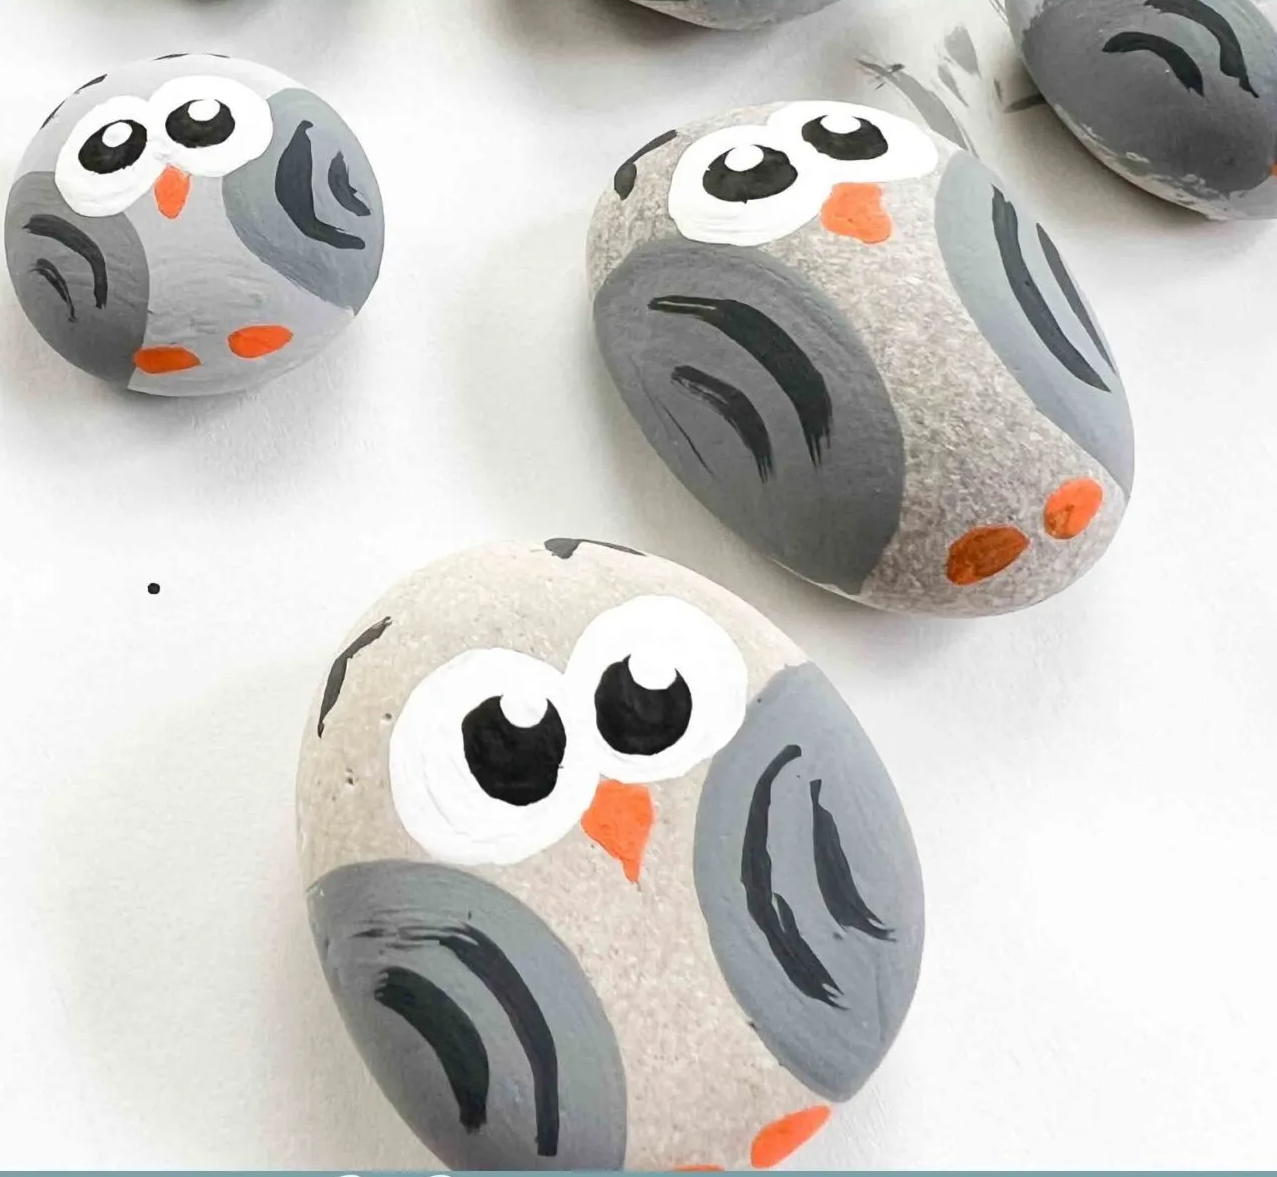 Three grey painted rocks that look like owls. 